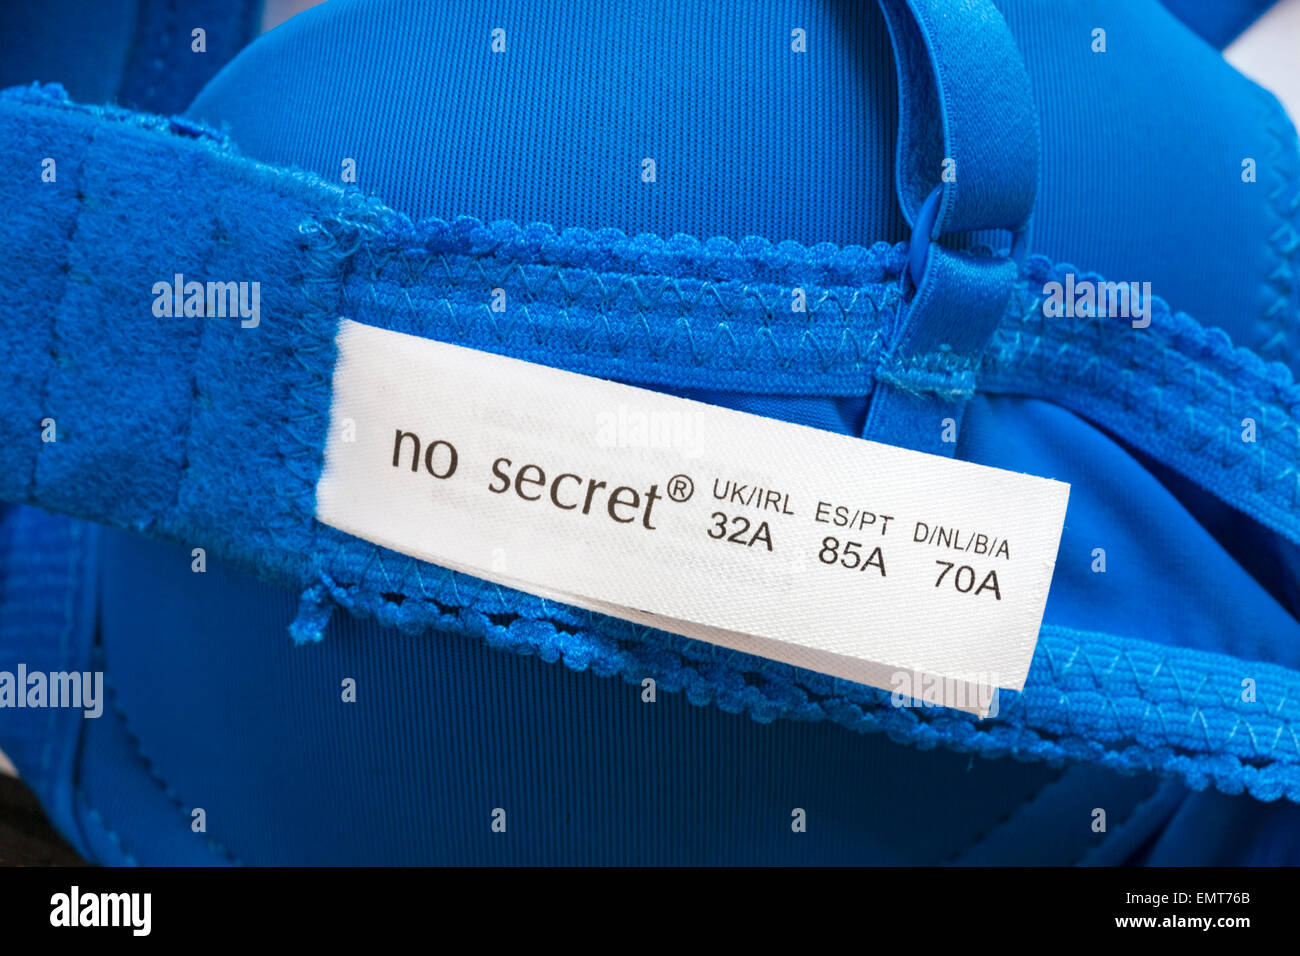 Label in blue no secret bra size 32A Stock Photo - Alamy